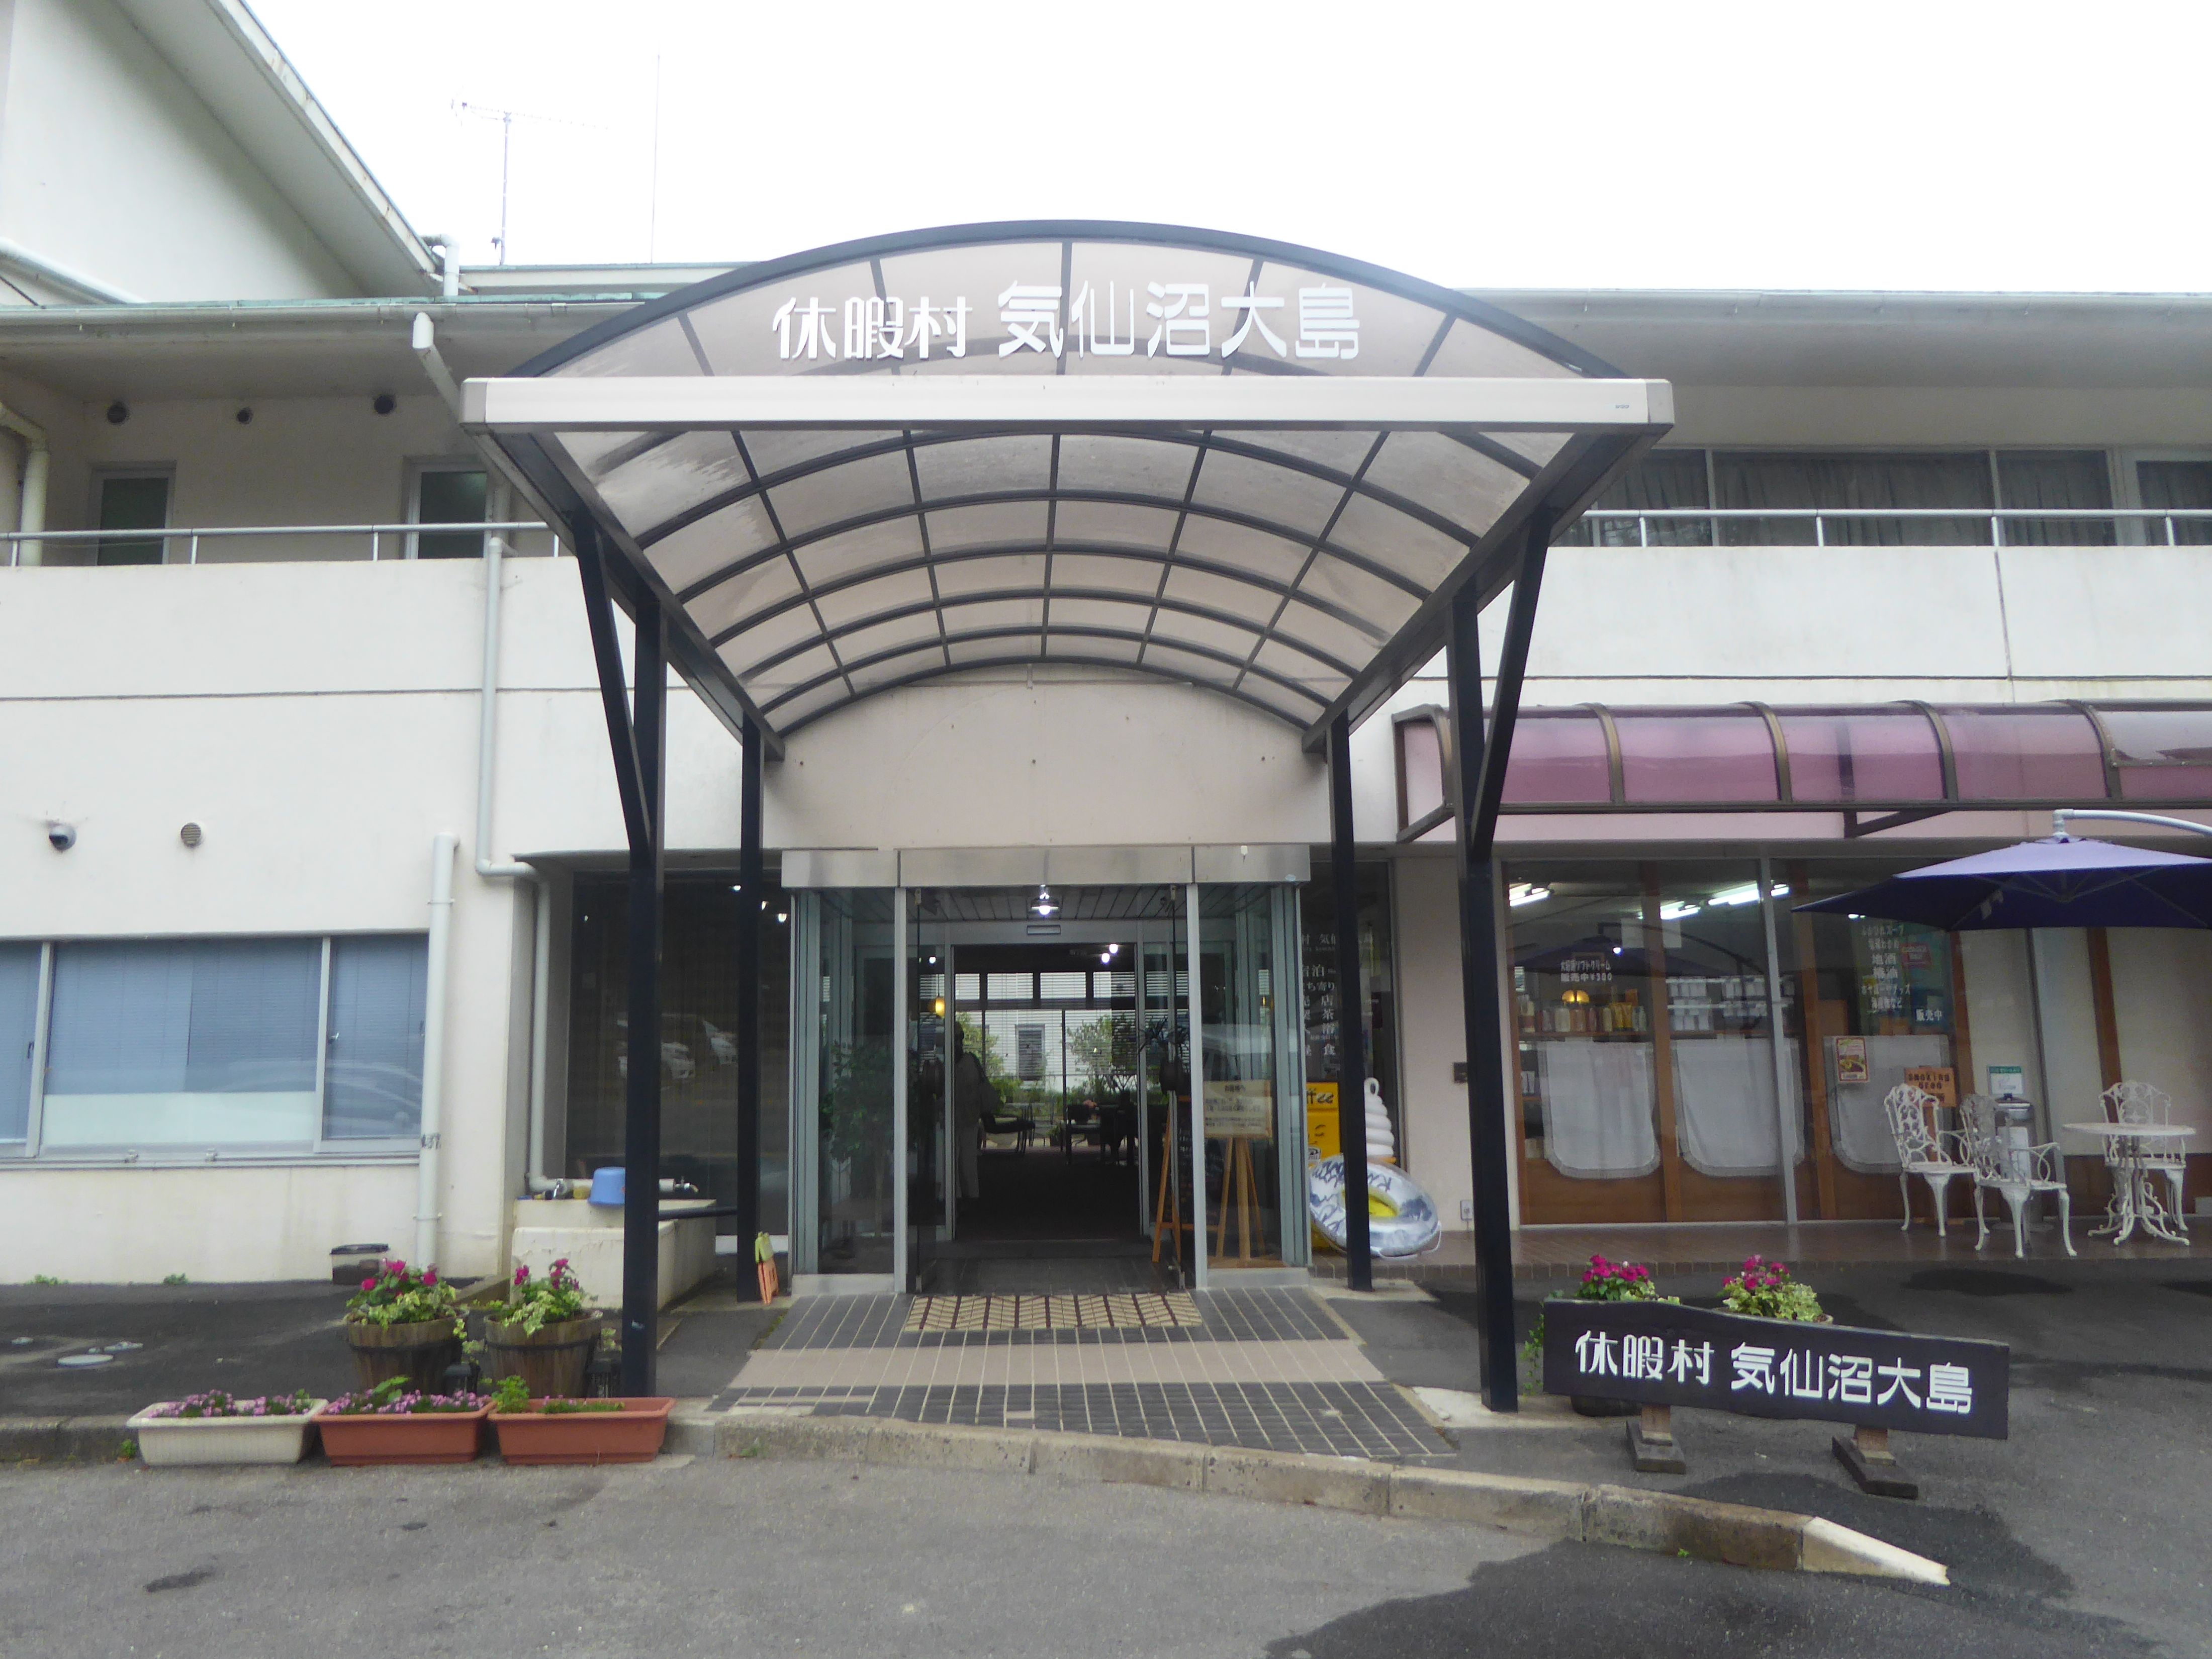 koshima02.jpg